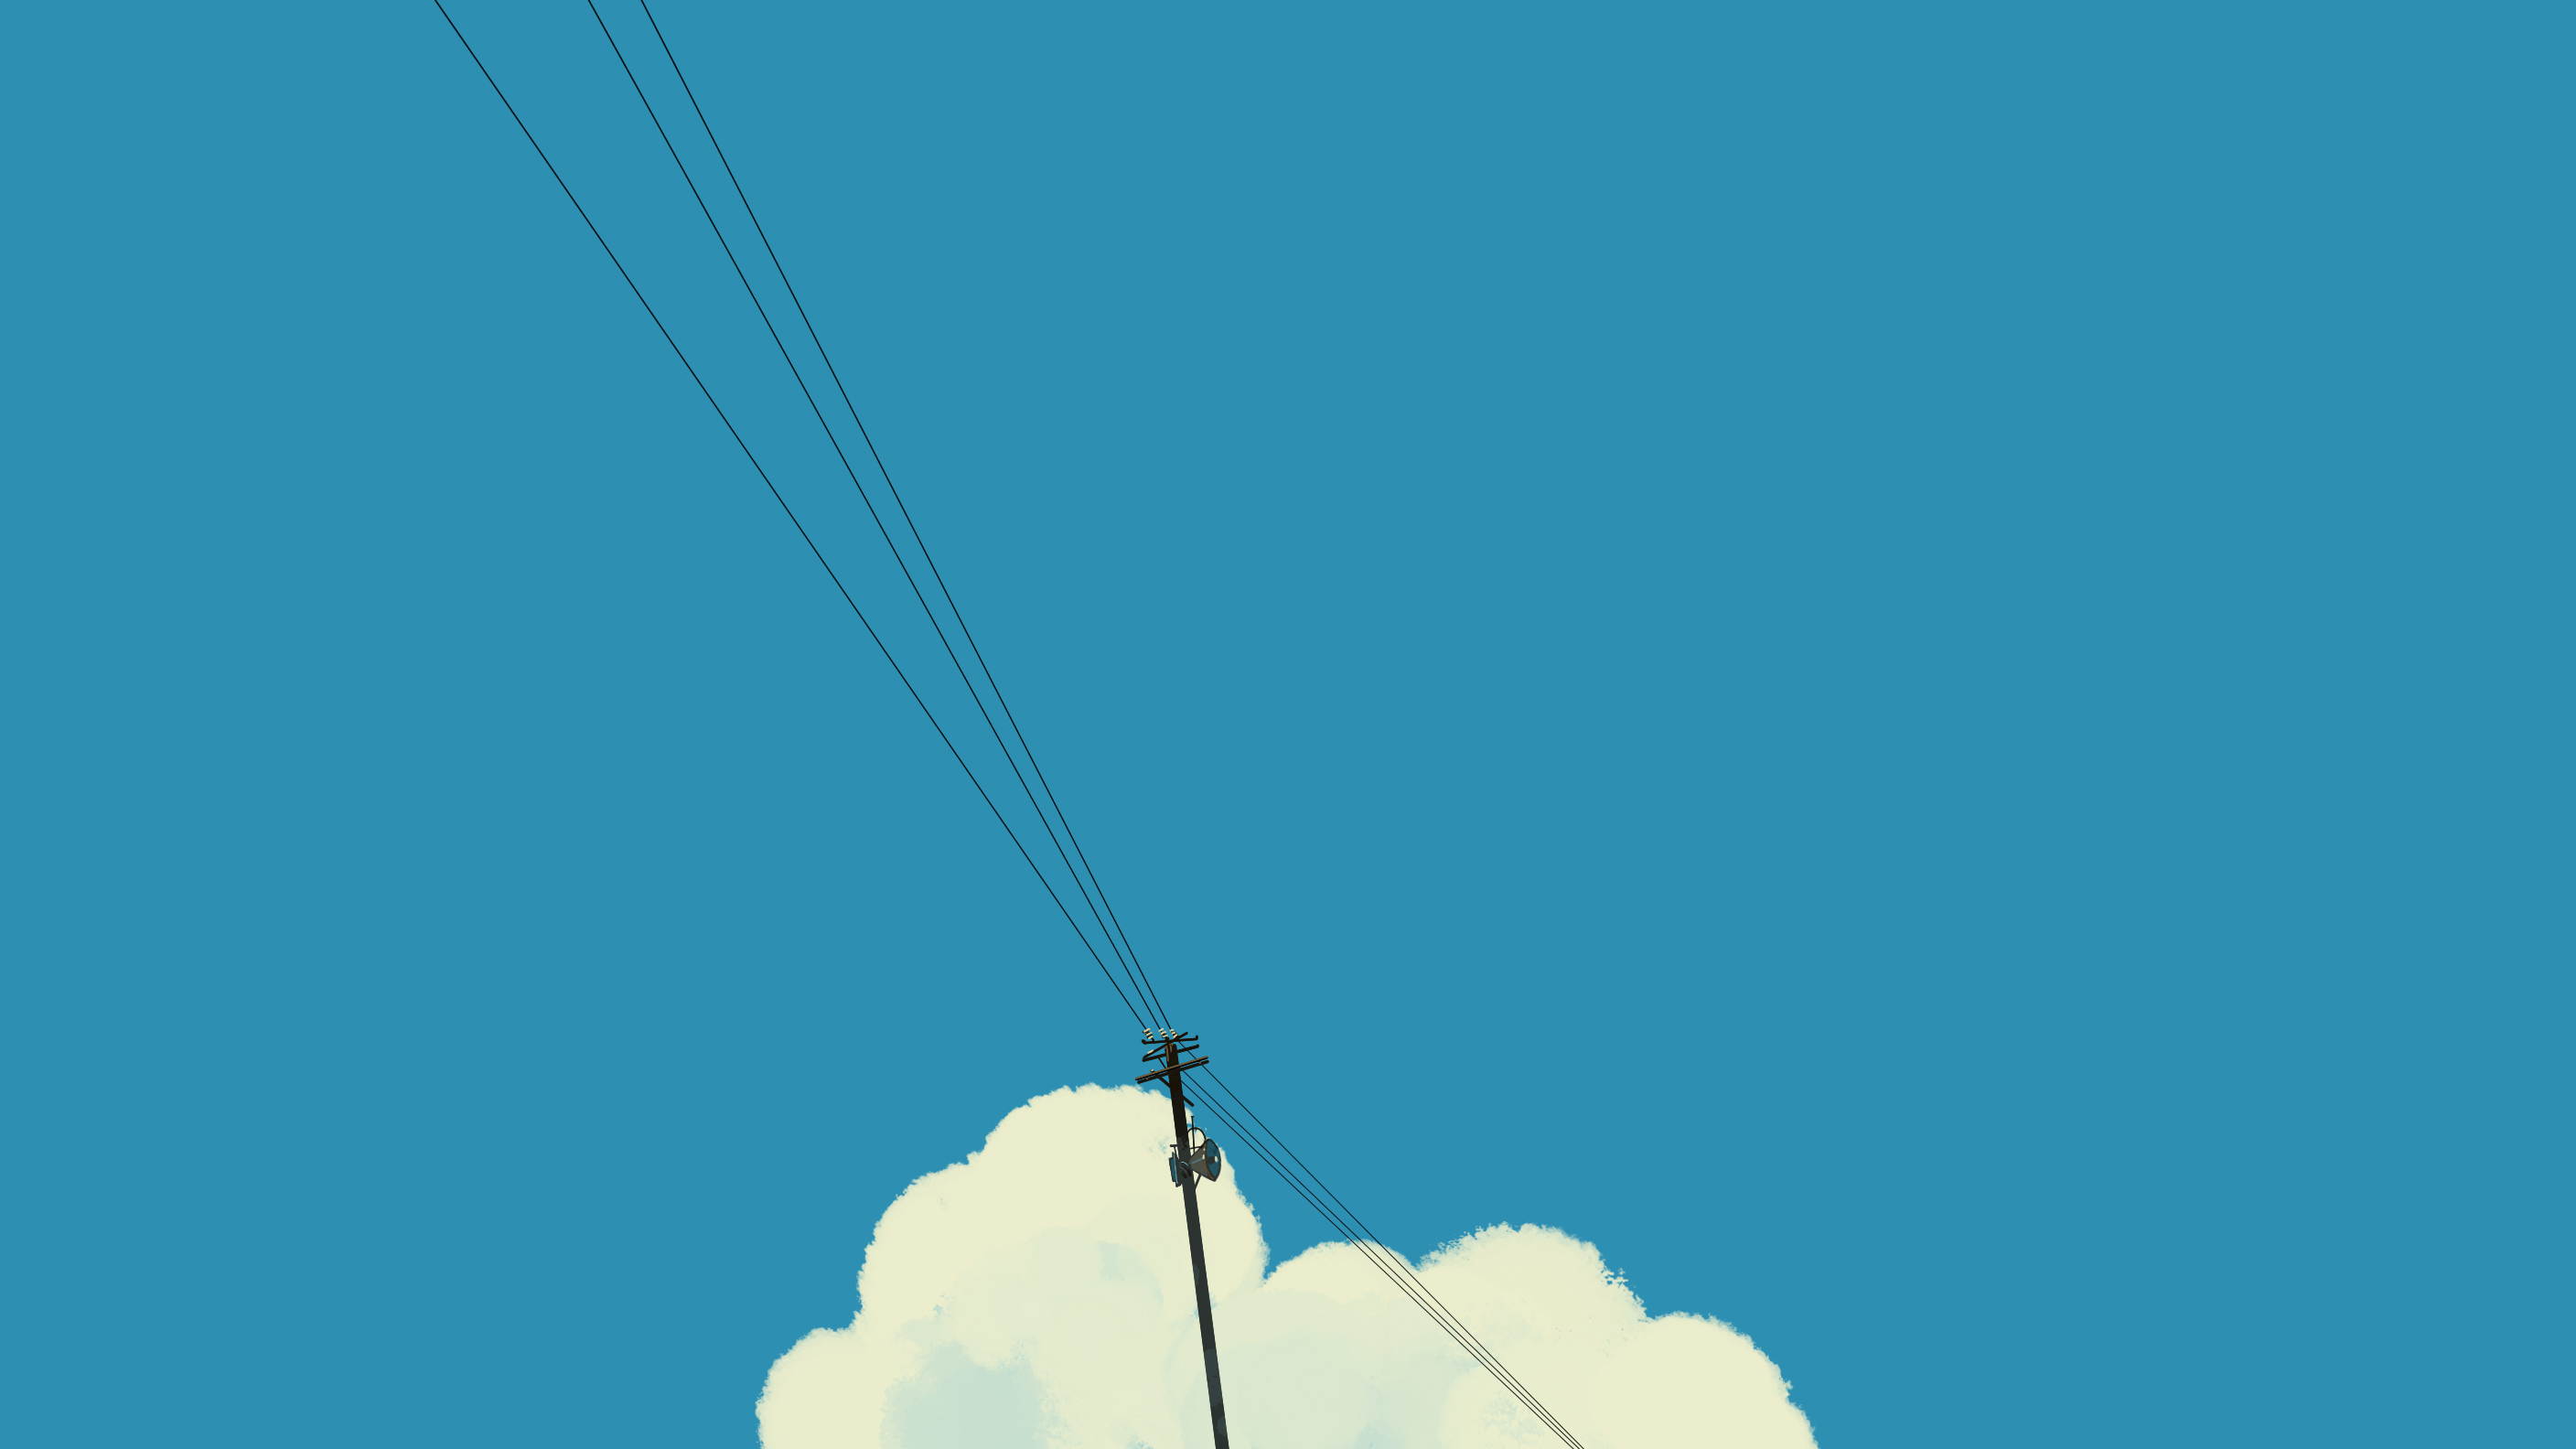 General 2816x1584 digital art artwork illustration sky minimalism clouds utility pole blue simple background